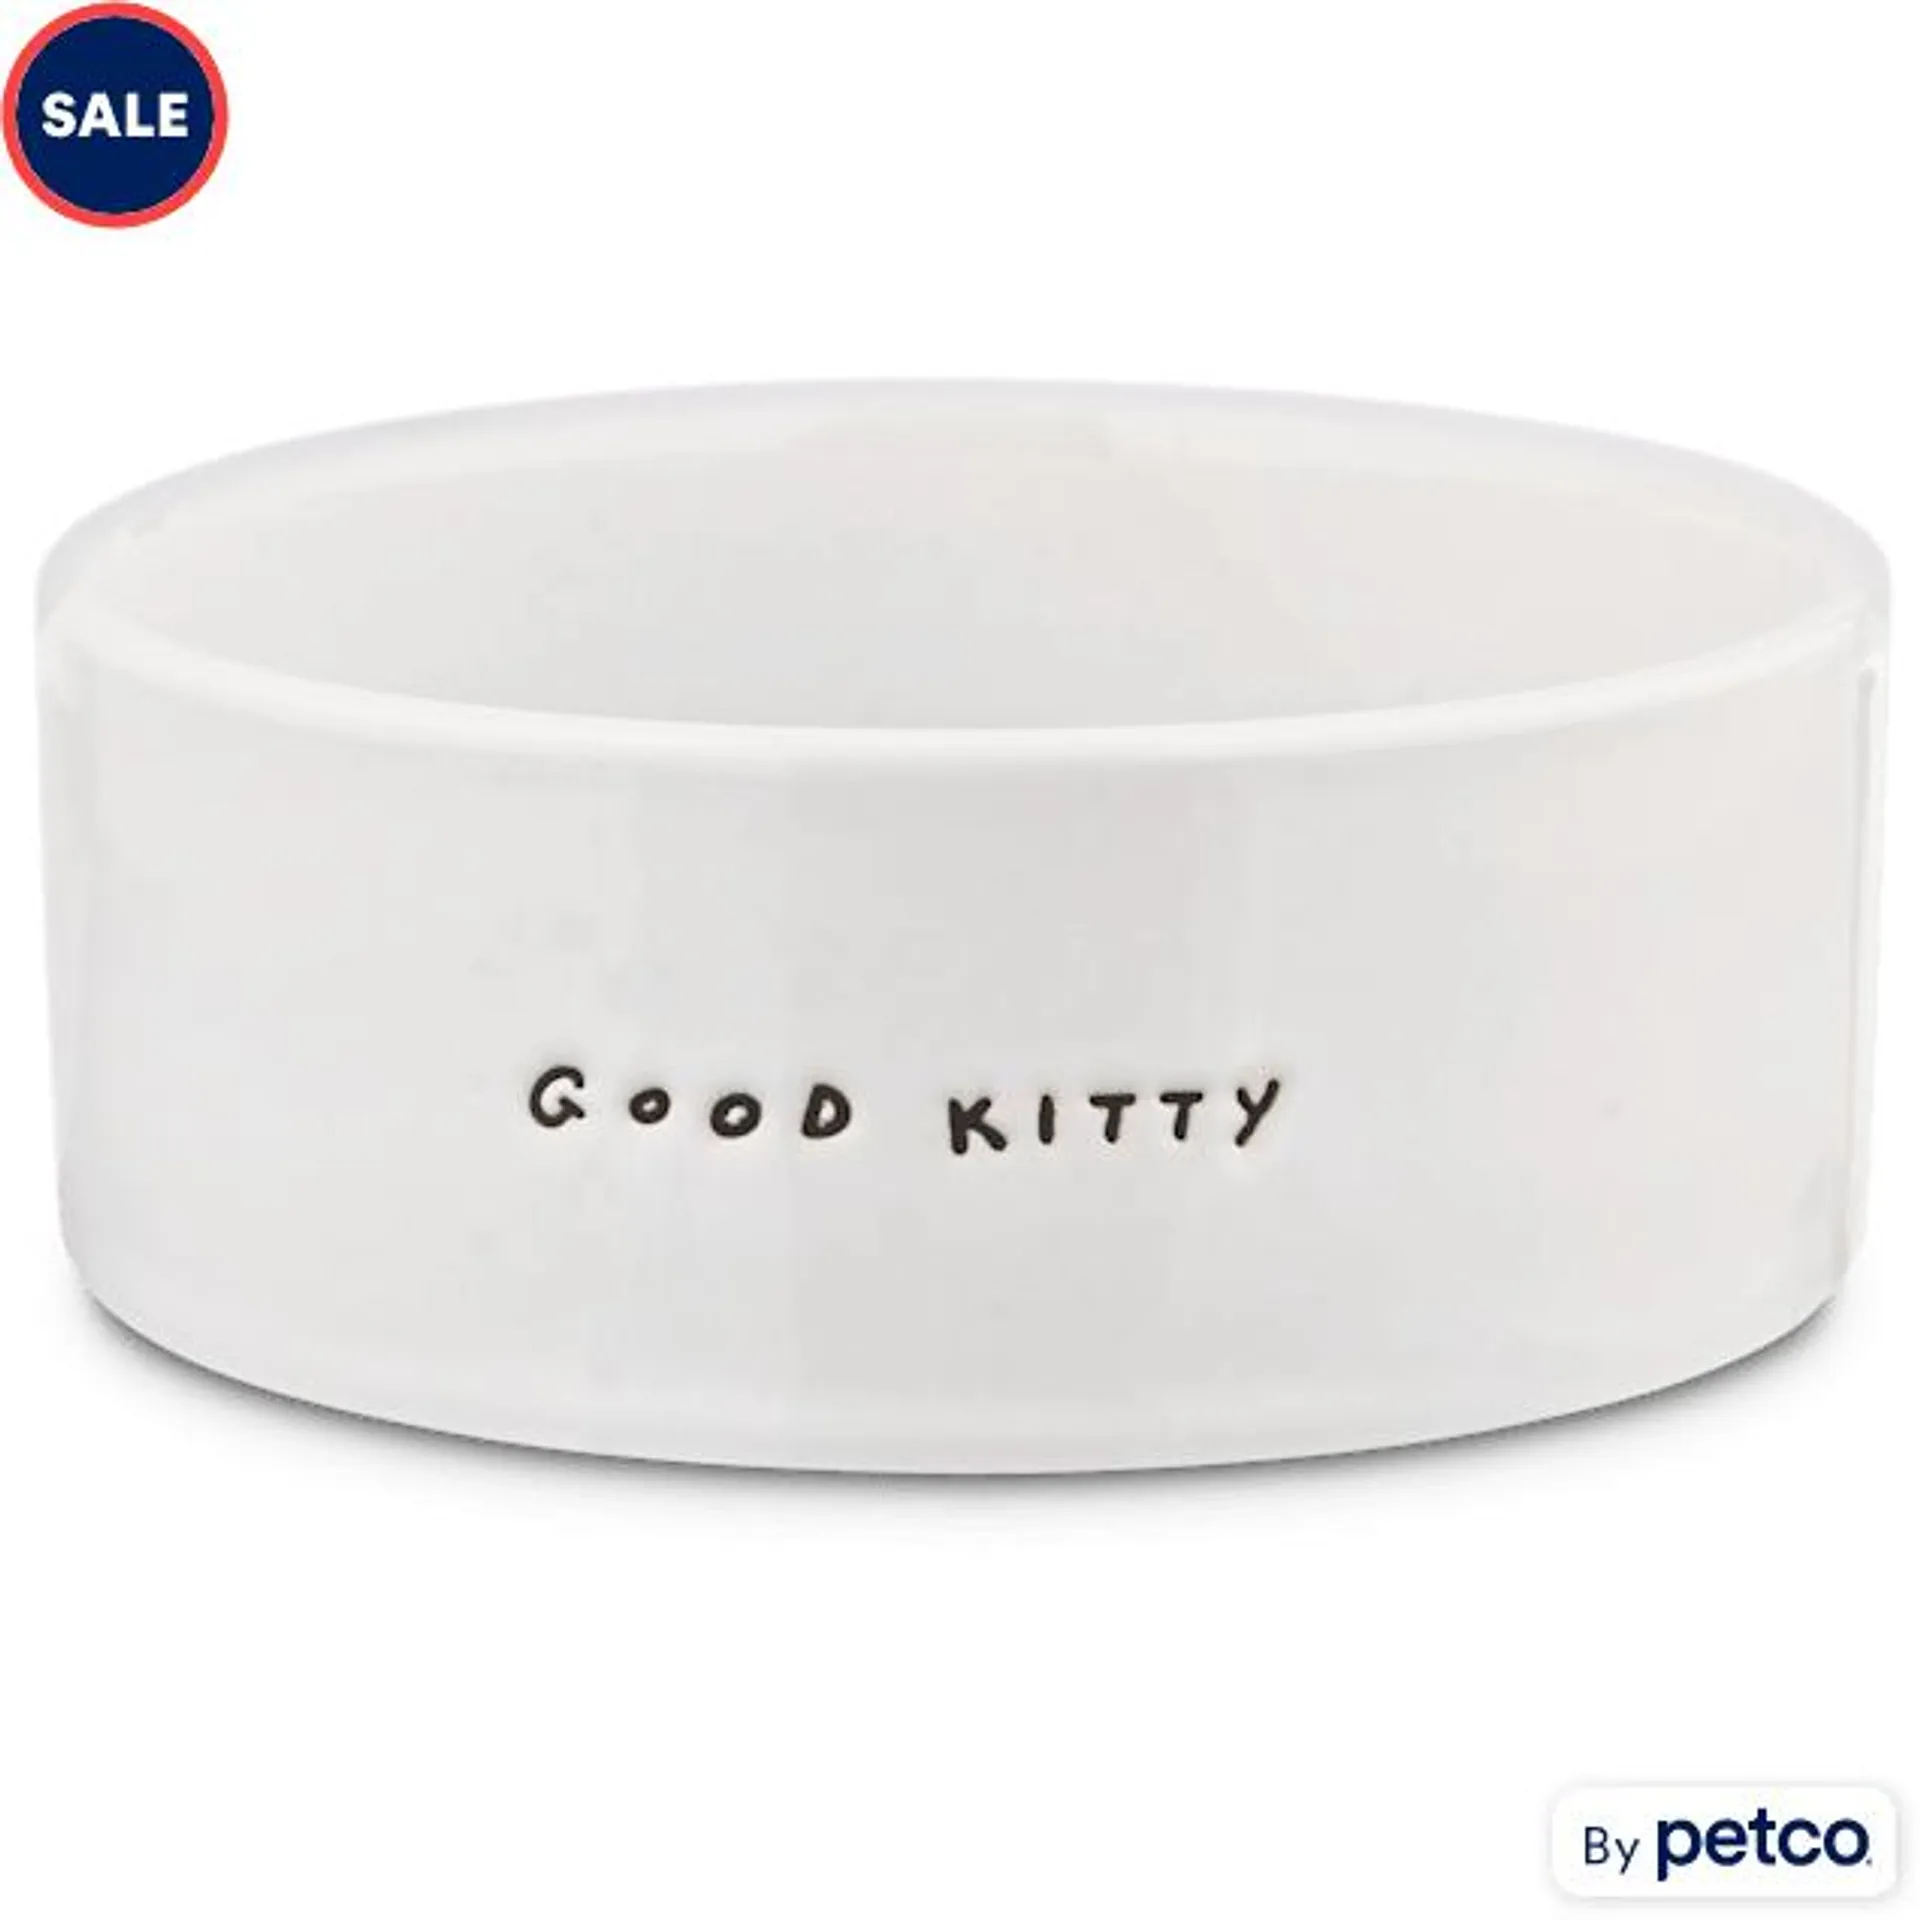 Harmony Good Kitty Ceramic Cat Bowl, 1 Cup